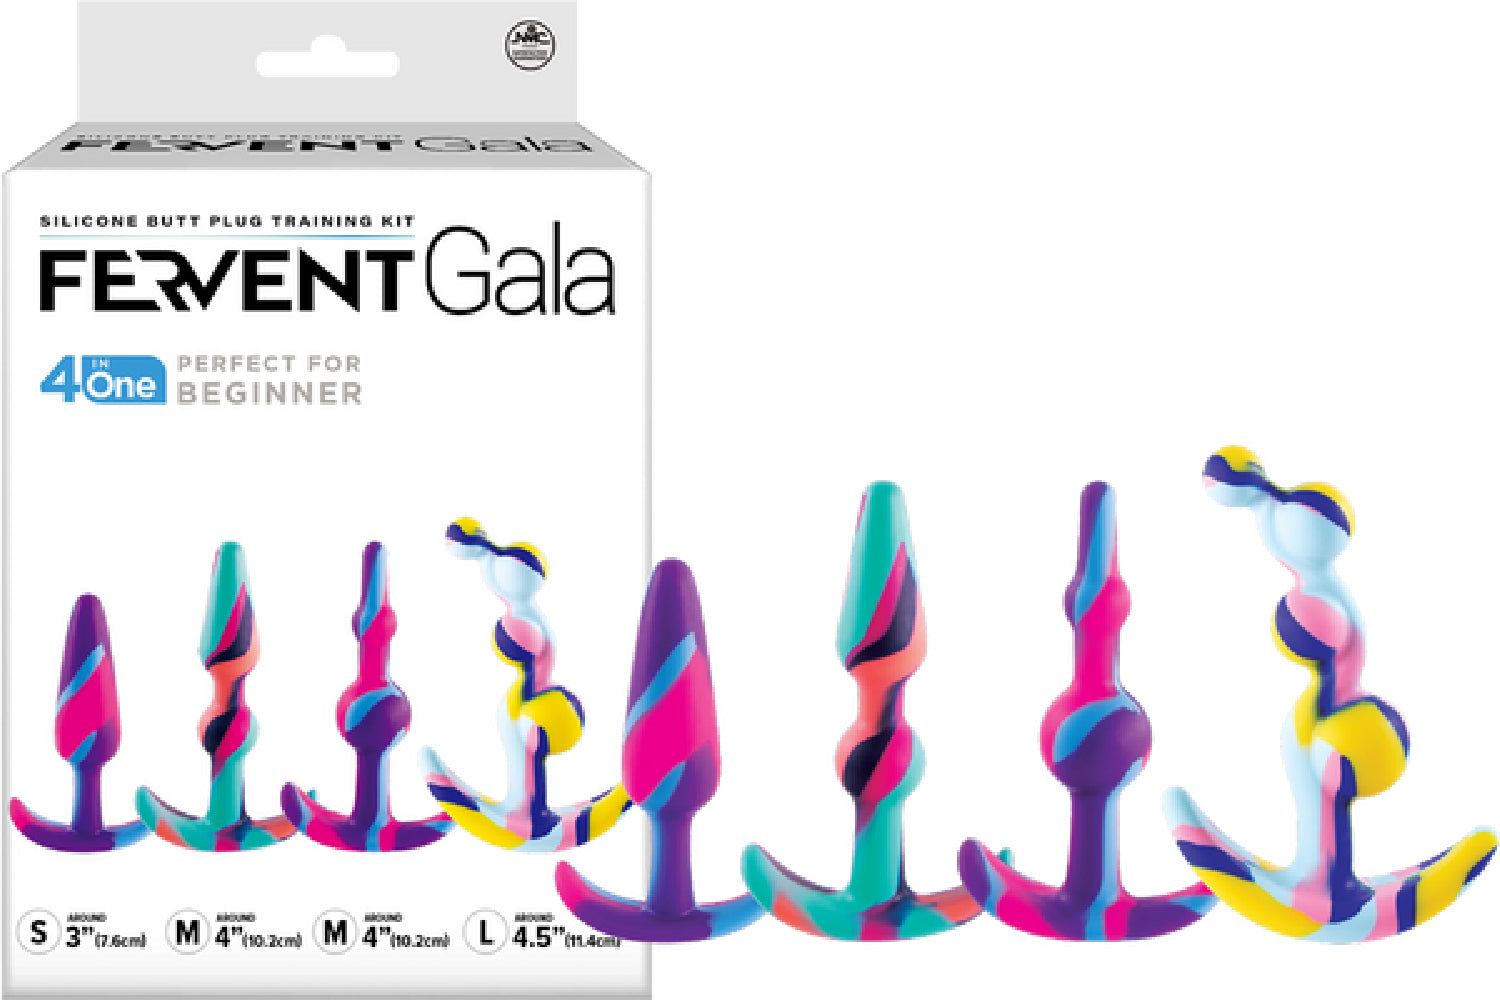 Fervent Gala - Silicone Butt Plug Training Kit - Multi Coloured